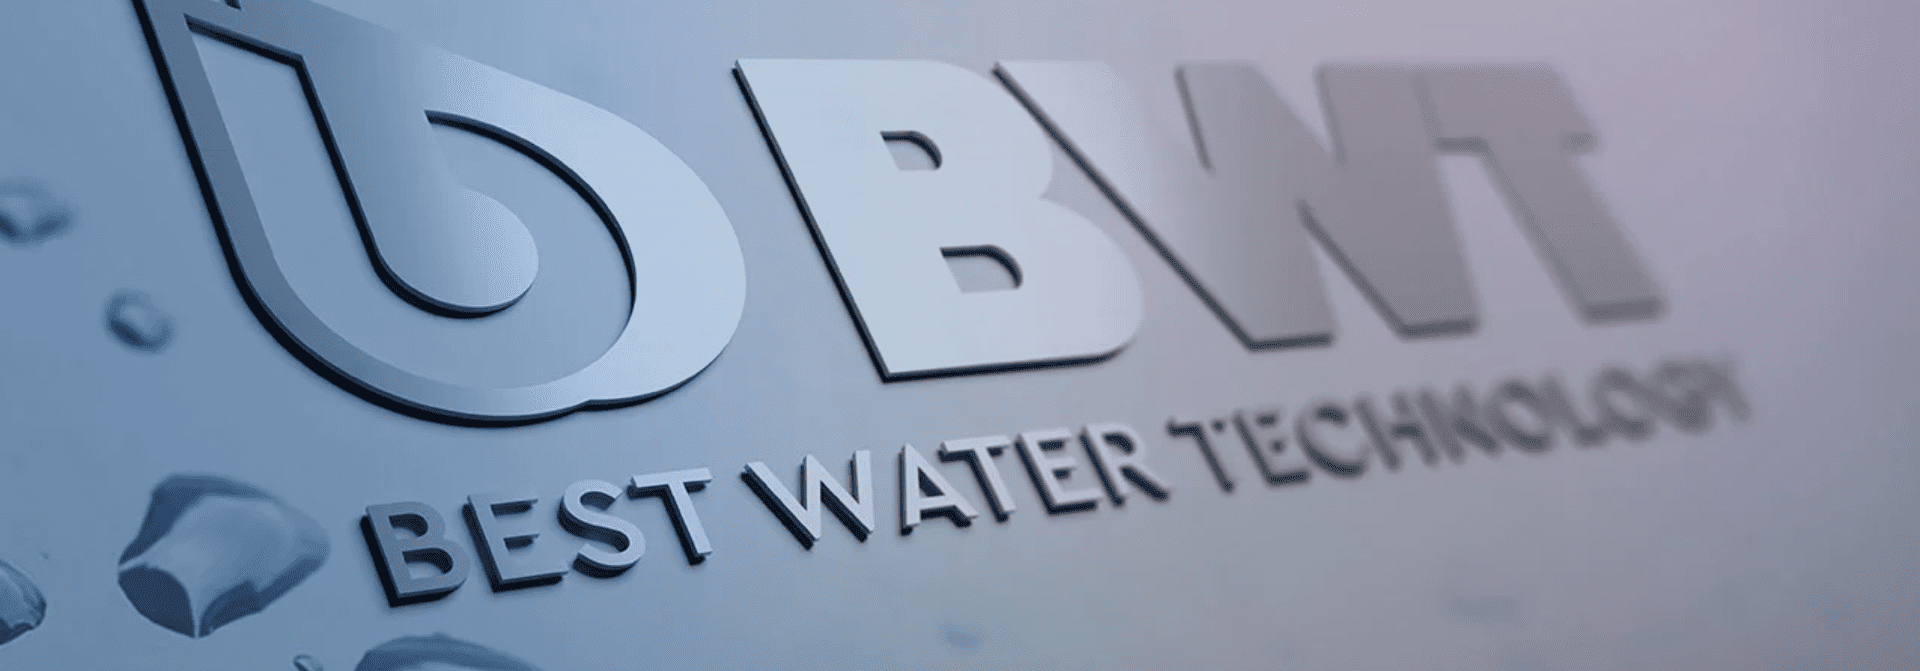 Best water technology